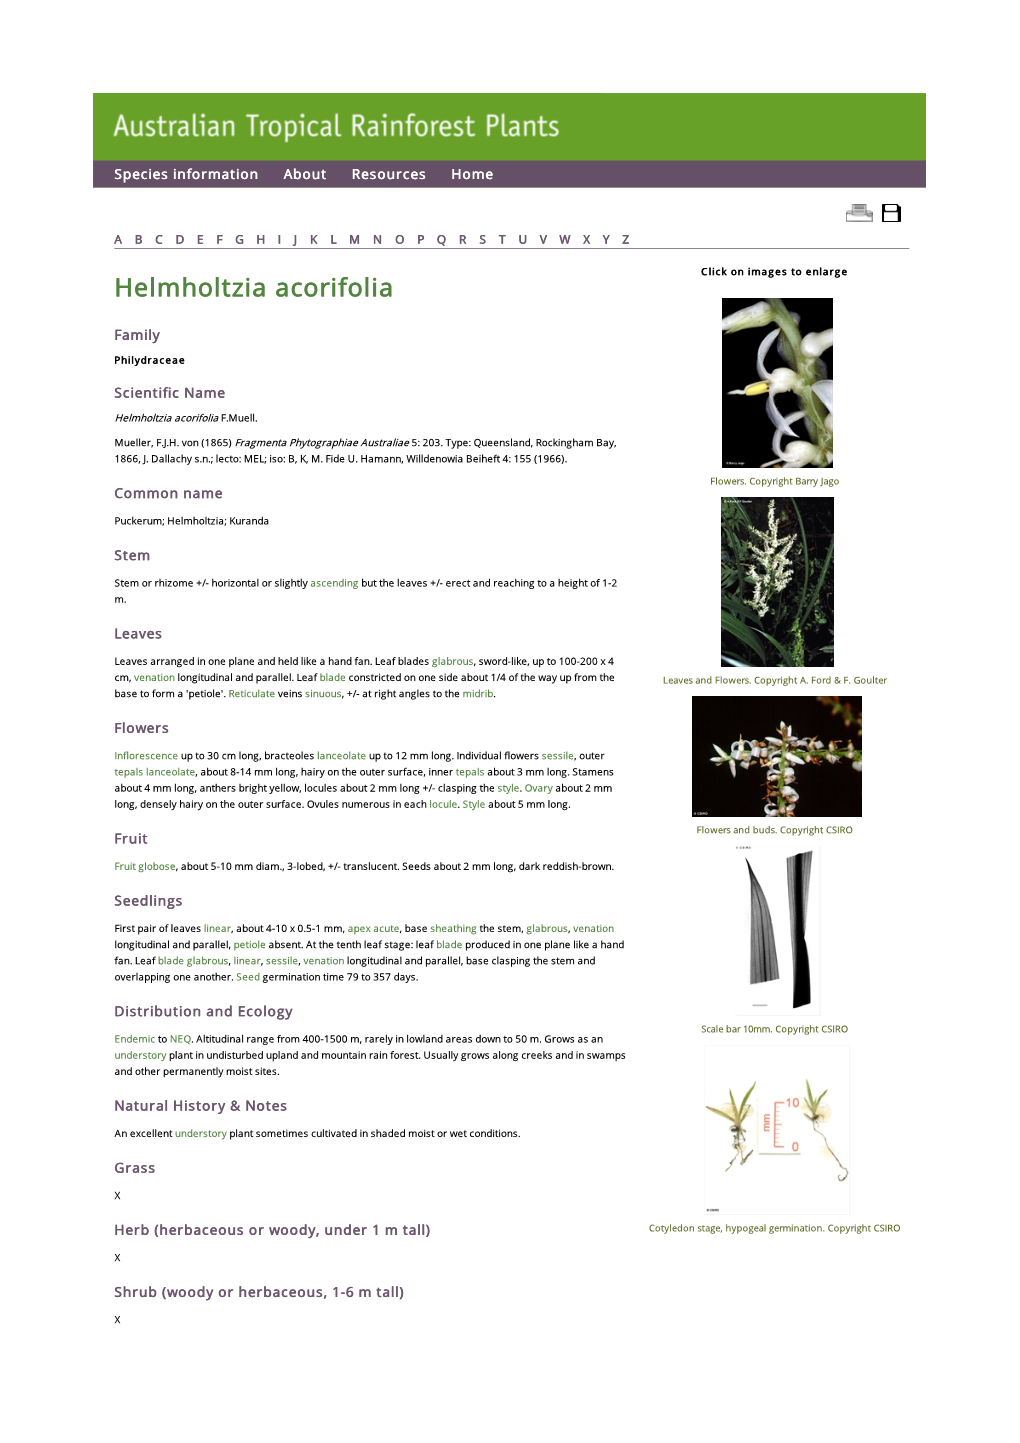 Helmholtzia Acorifolia Click on Images to Enlarge